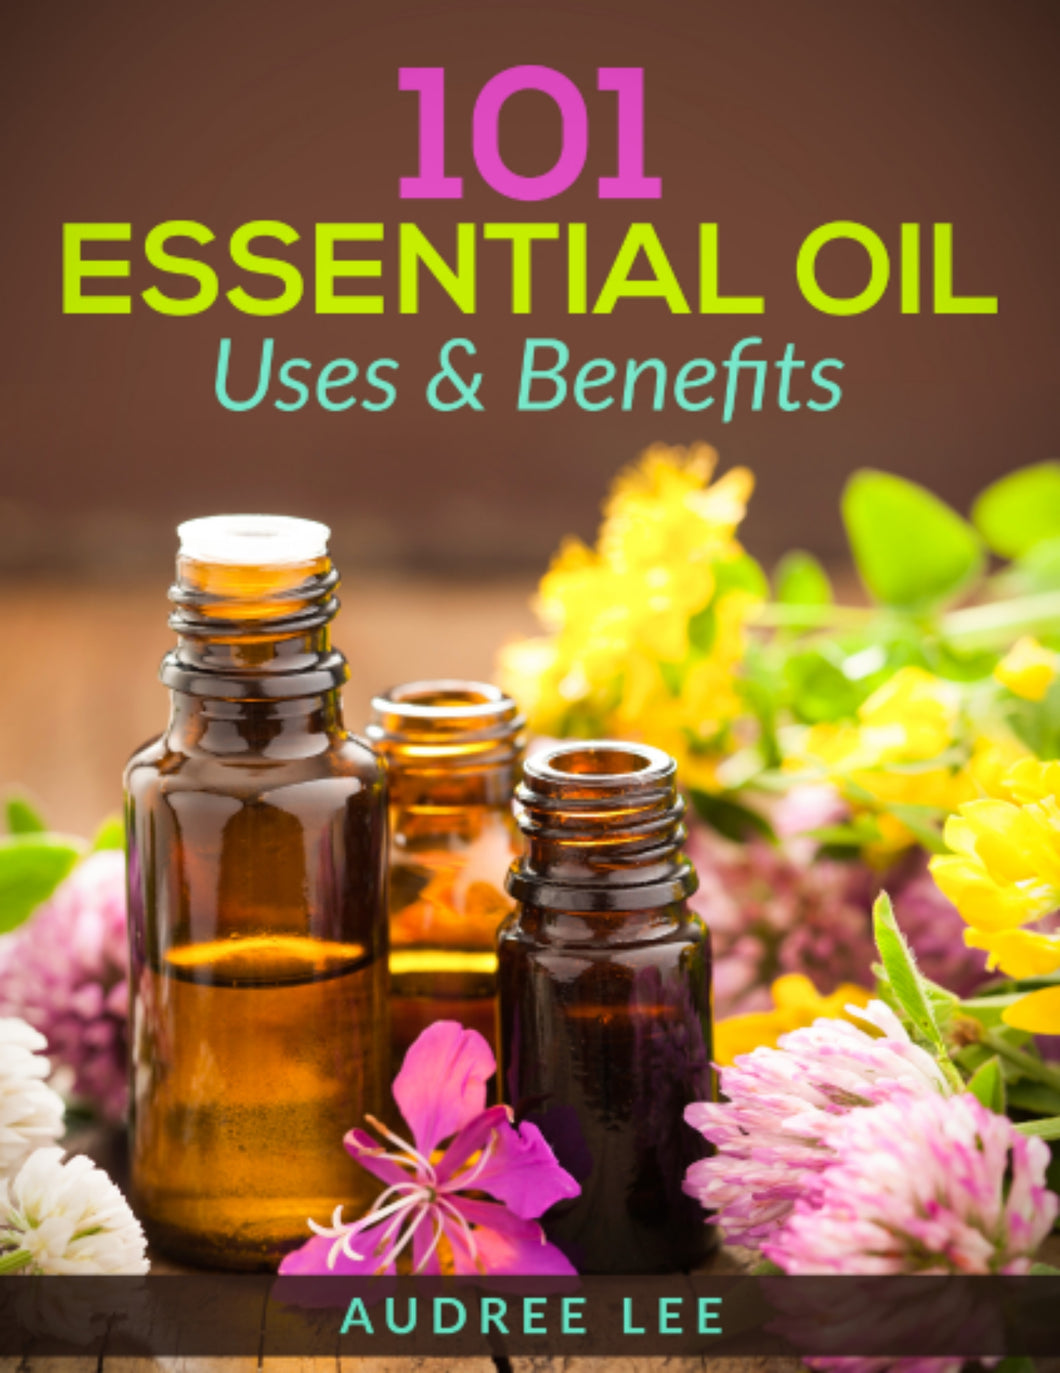 Essential Oils 101: Uses & Benefits - Audree Lee